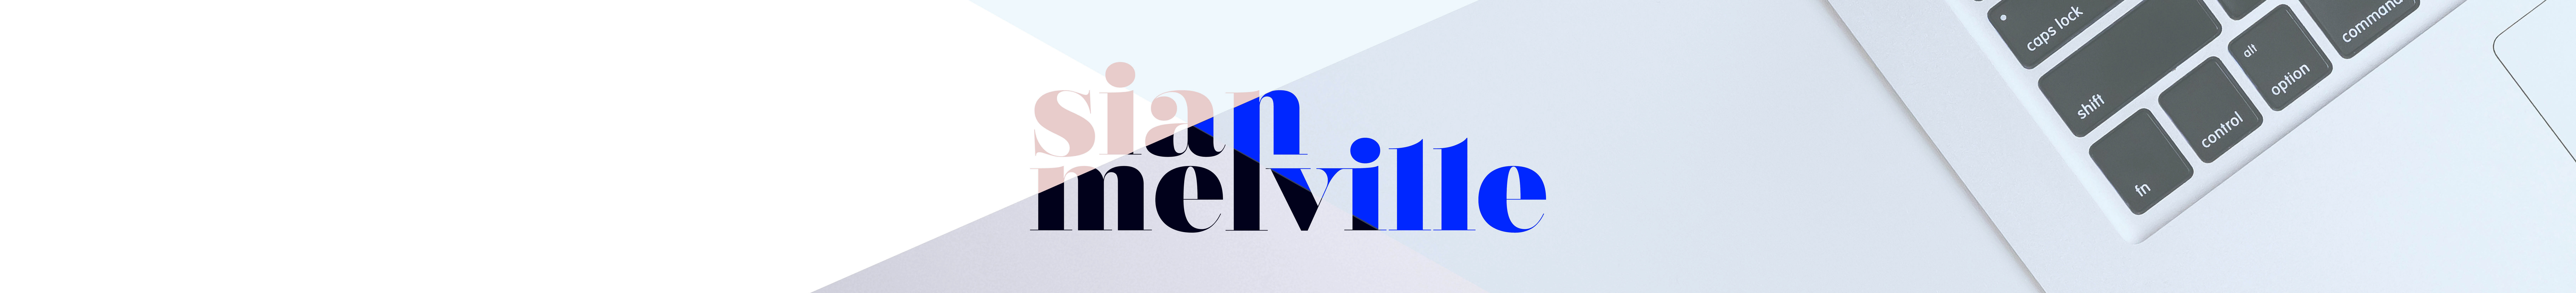 Sian Melville's profile banner